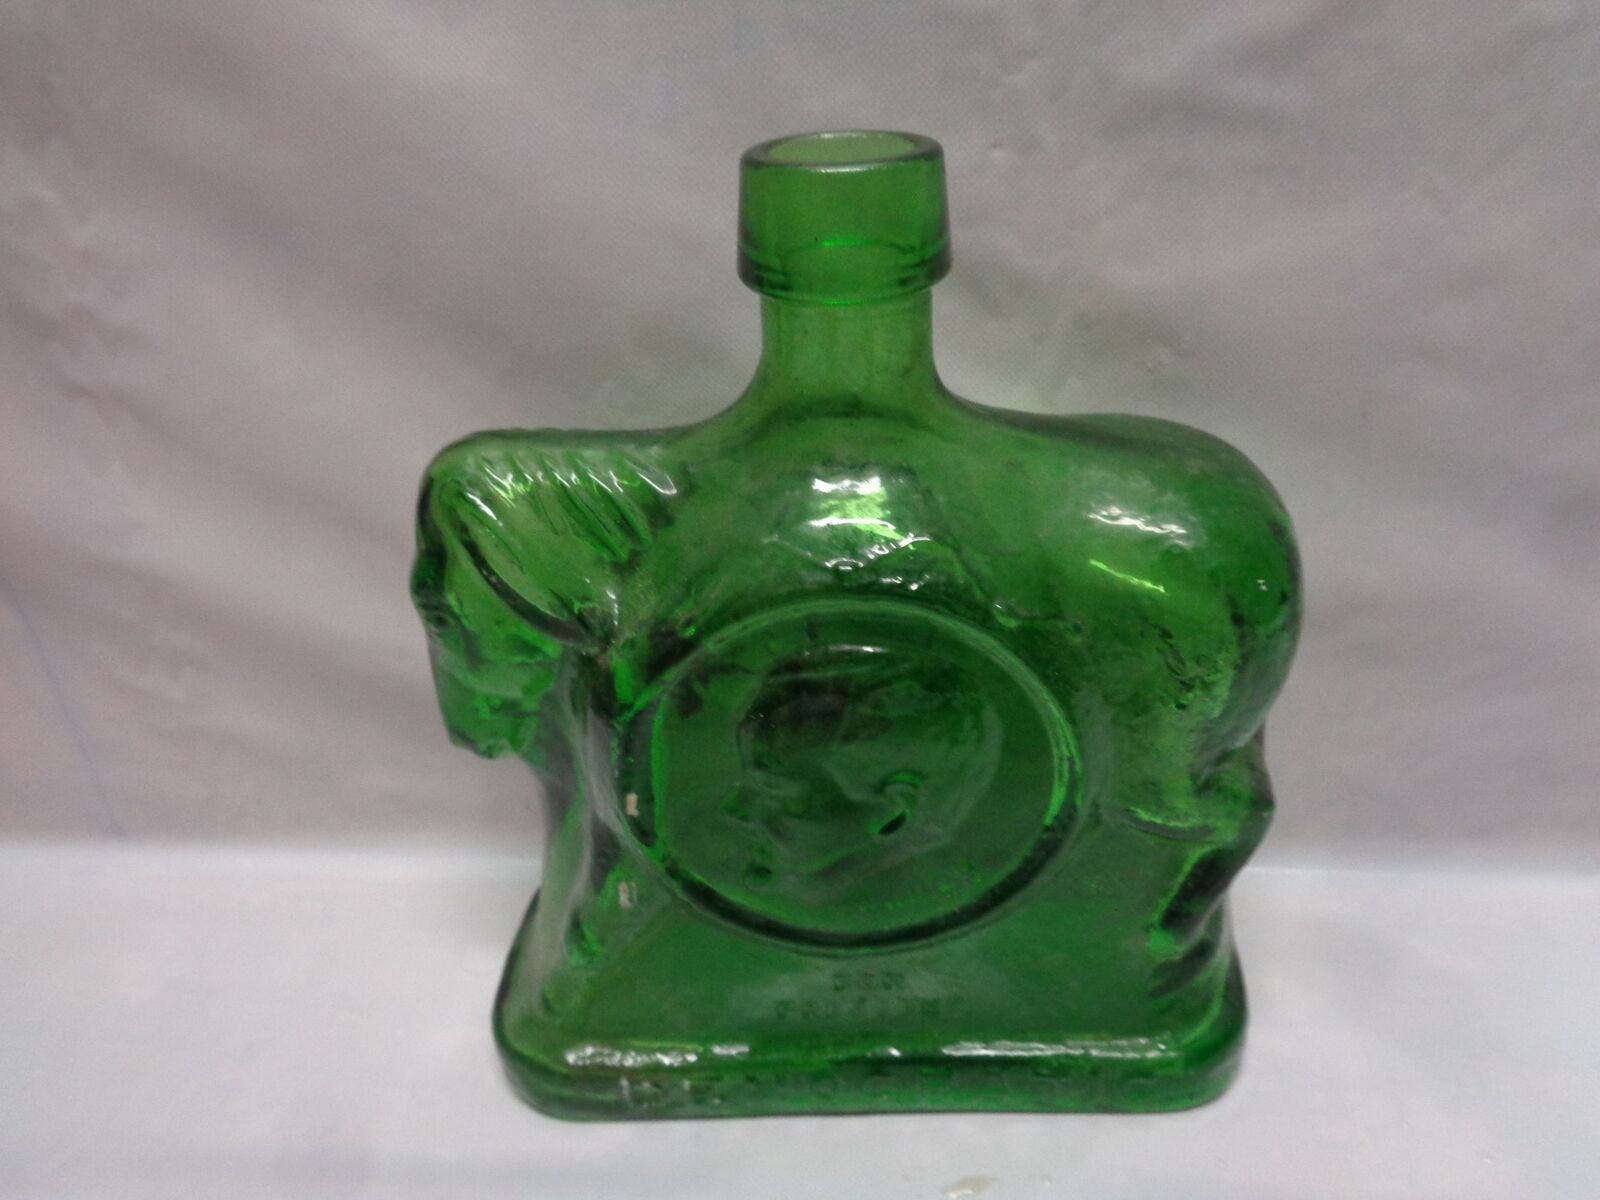 1968 Wheaton Democrat Donkey Humphrey Muskie\' 68 Green Glass Decanter Bottle